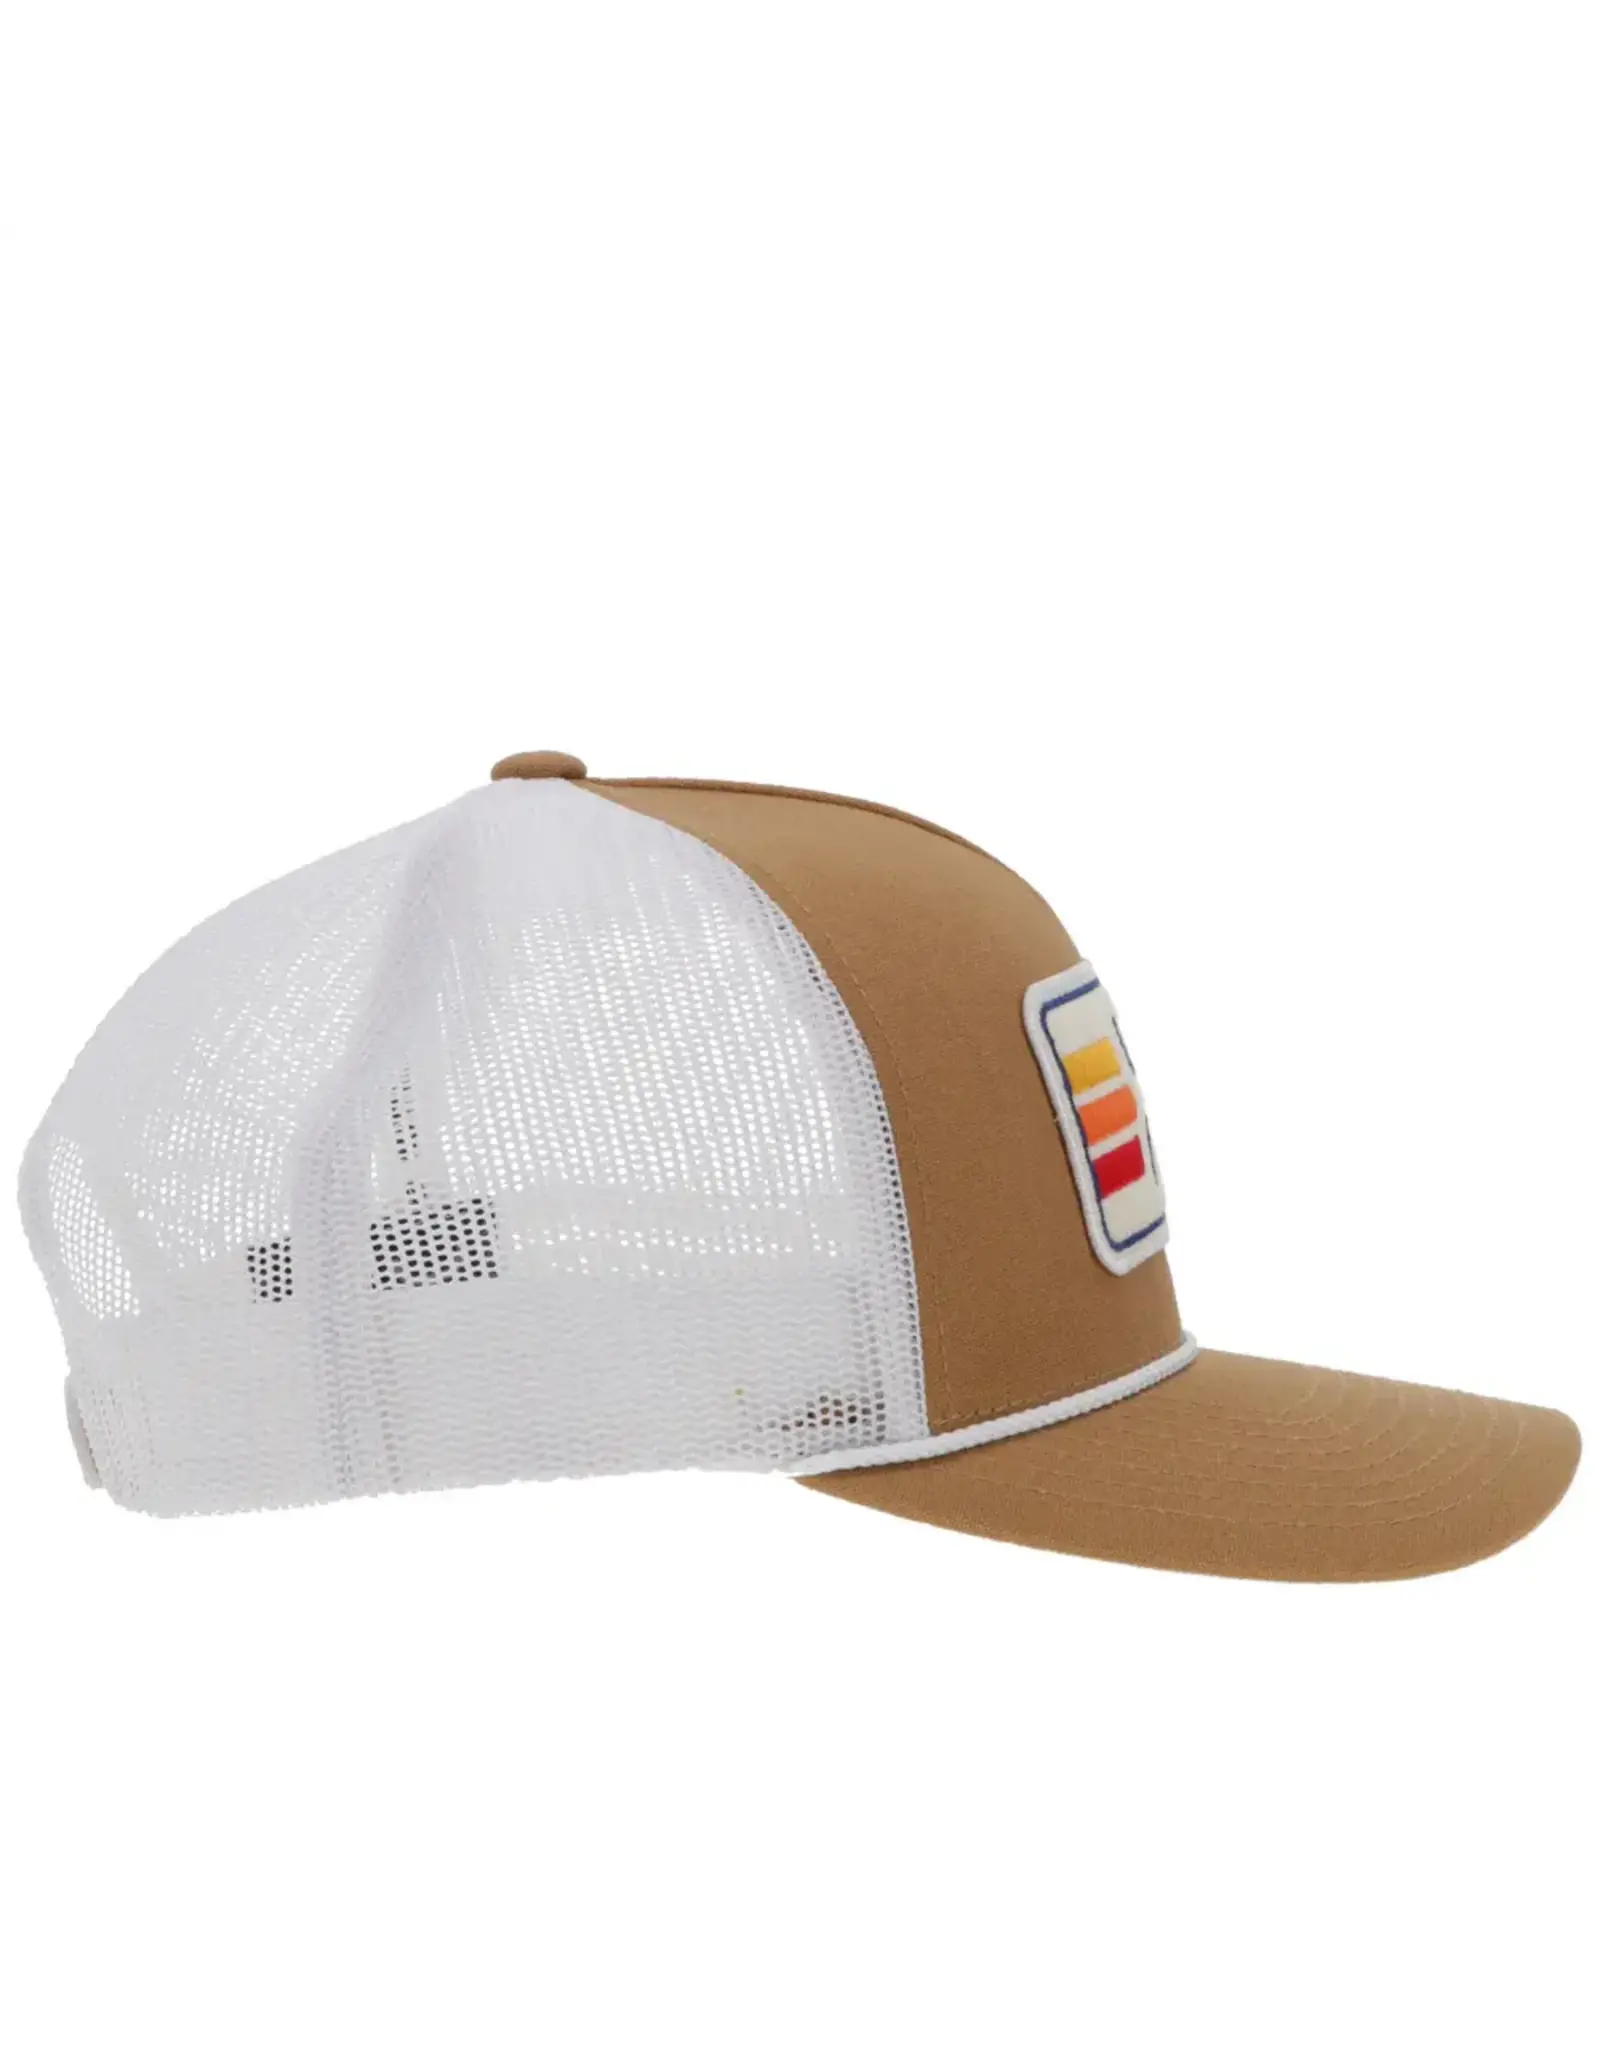 Hooey Brands Hat "Sunset" Tan/White